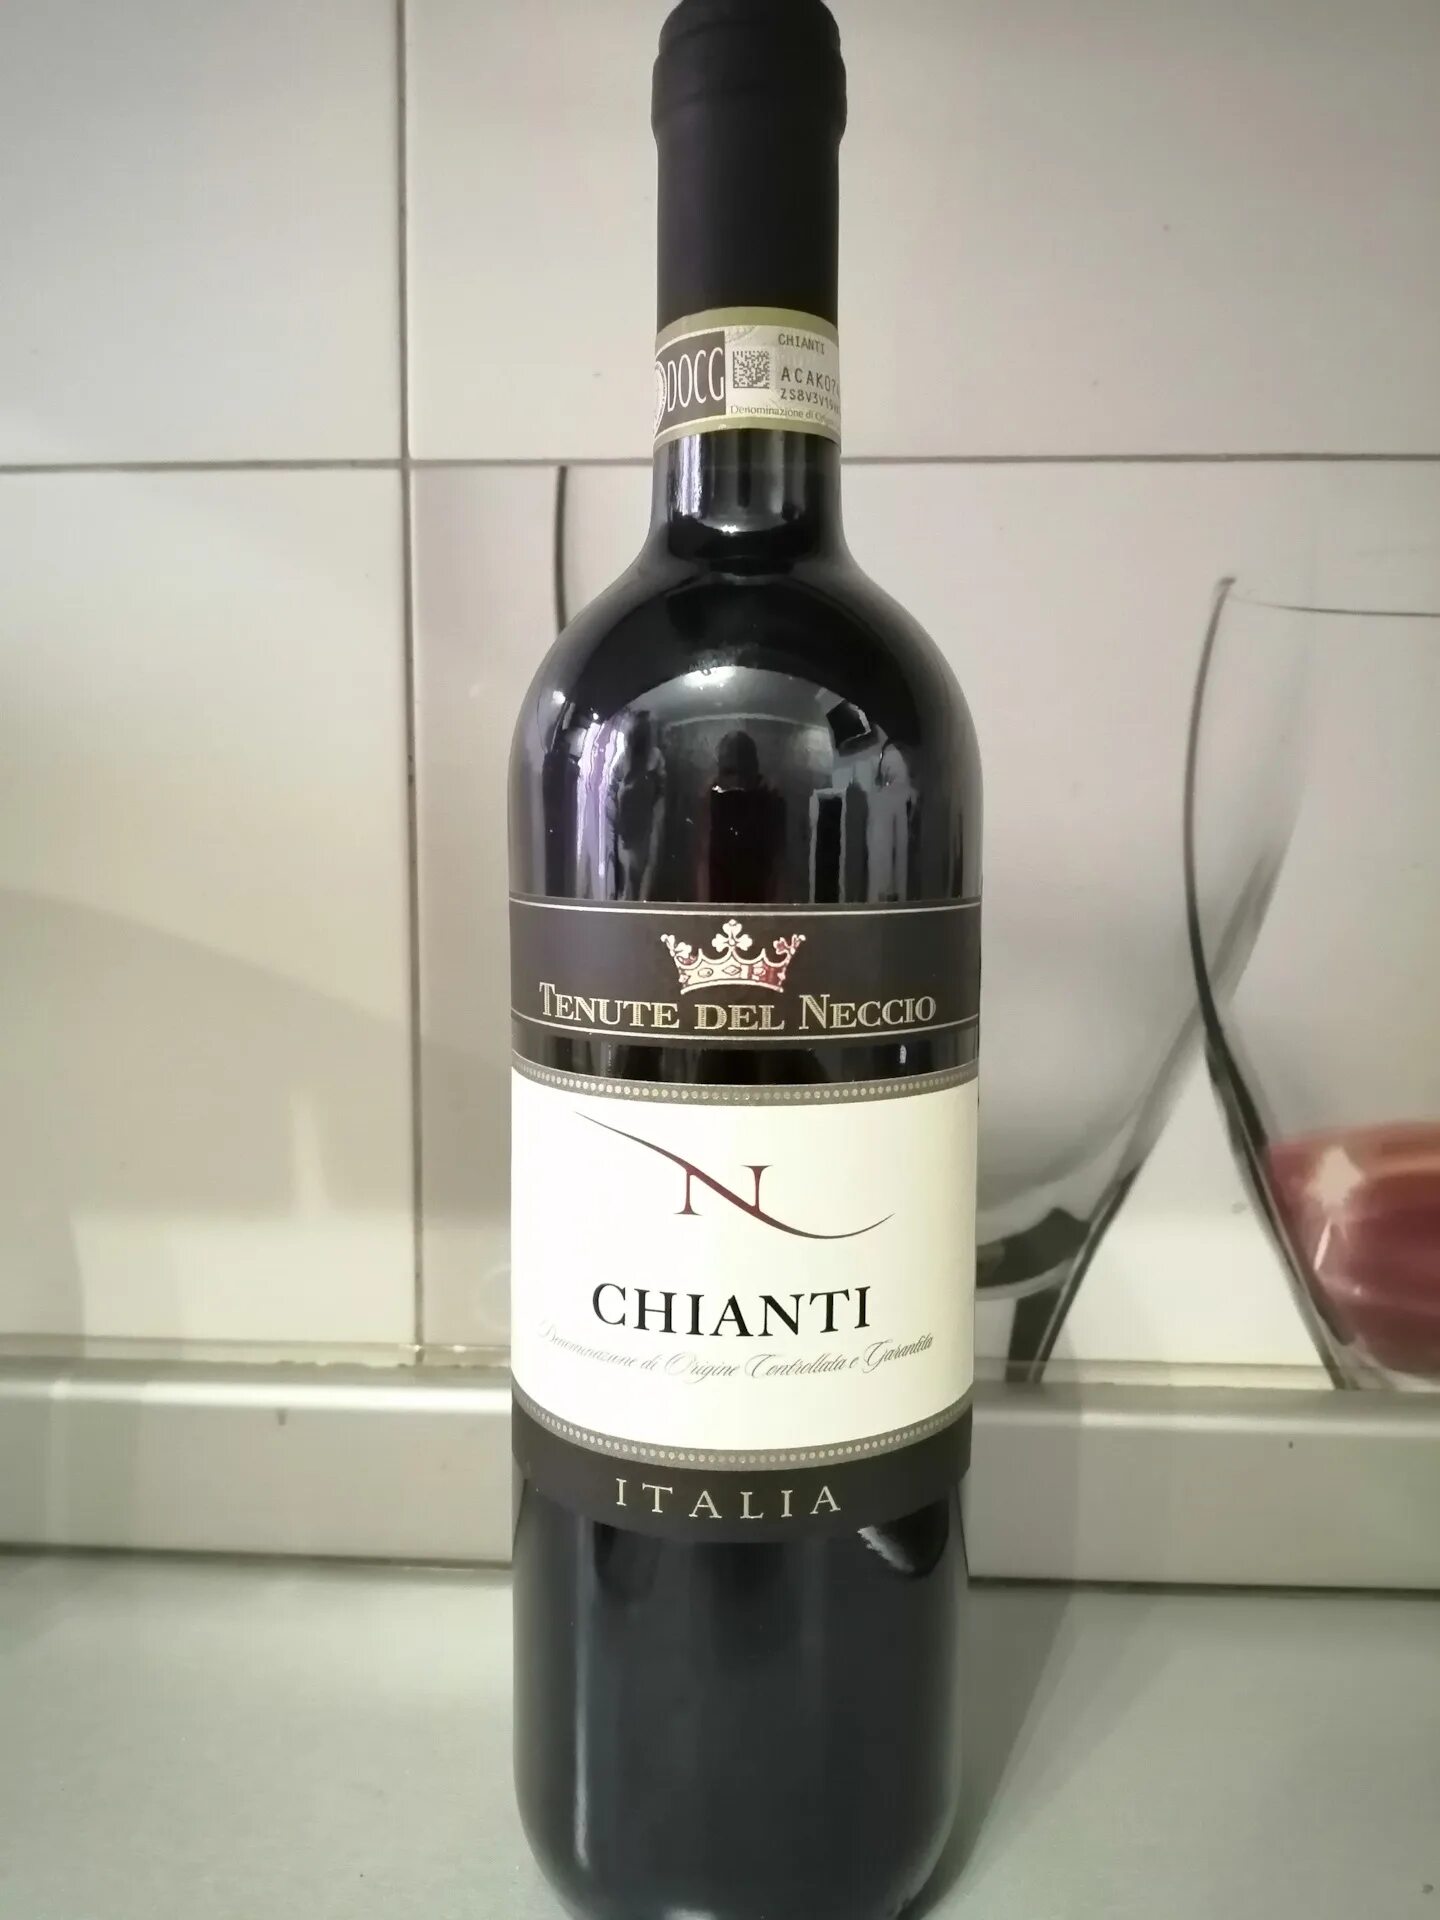 Вино Chianti Tenuta del Vecchio. Chianti вино красное сухое Италия. Chianti вино красное Италия. Вино Тенута дель Веччио Кьянти красное сухое. Кьянти красное сухое купить